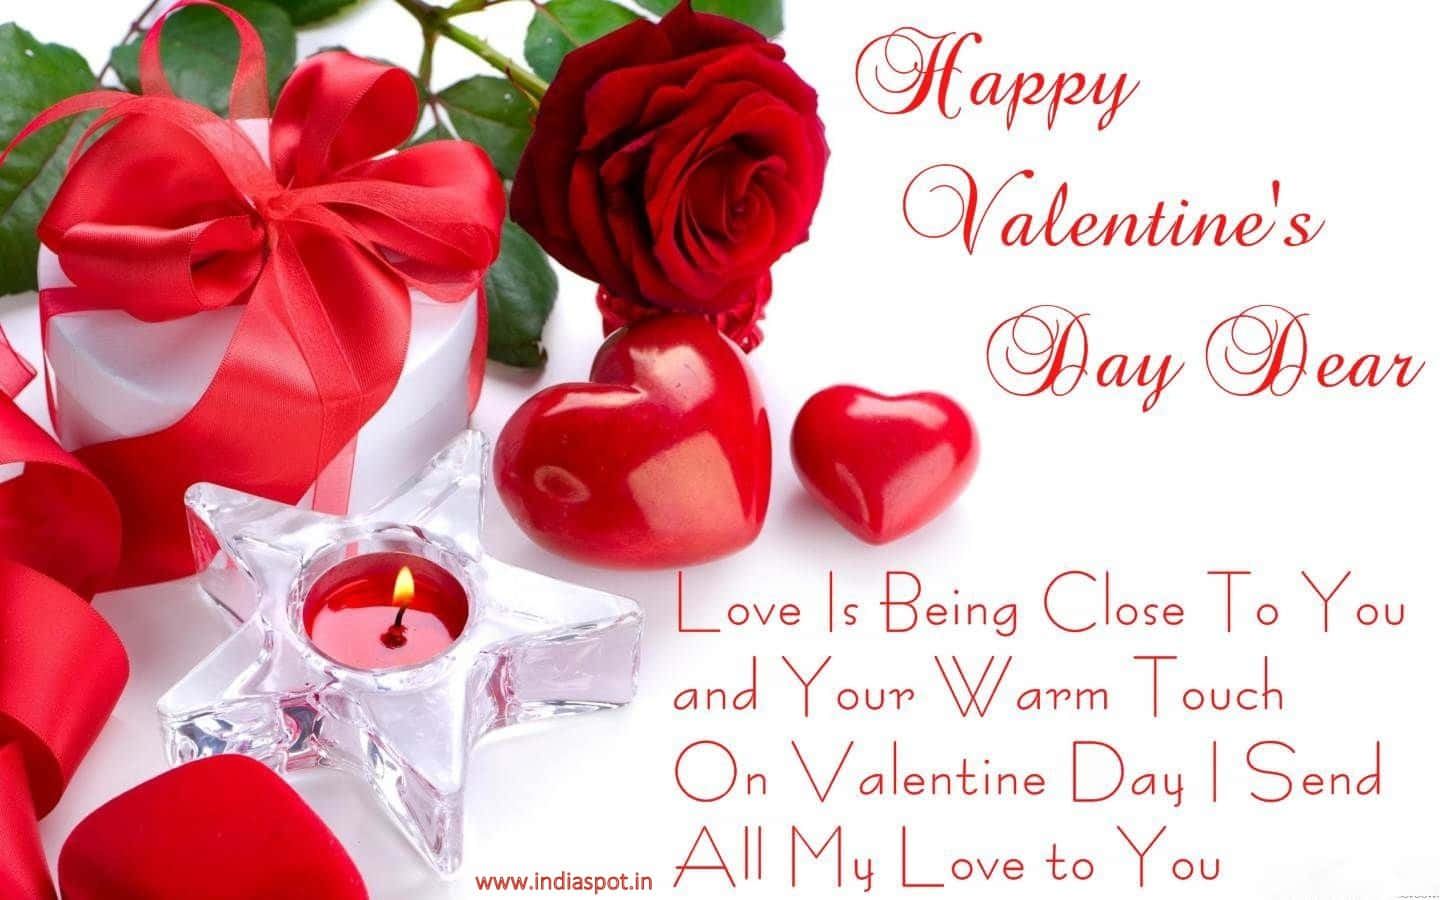 Celebrating Love, a Happy Valentines Wish